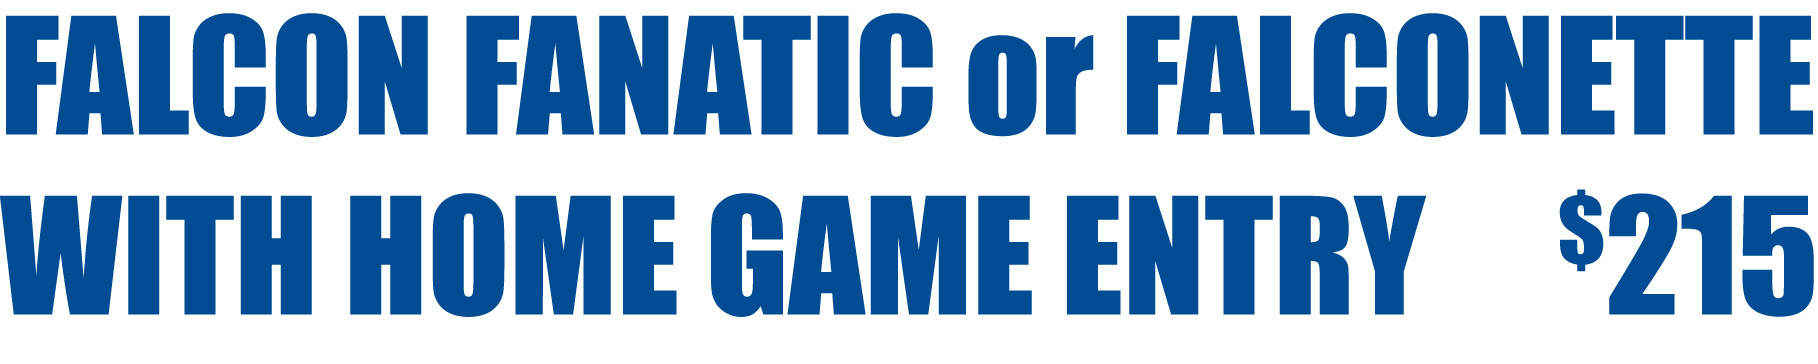 Falcon Fanatic Home Game Entry Membership